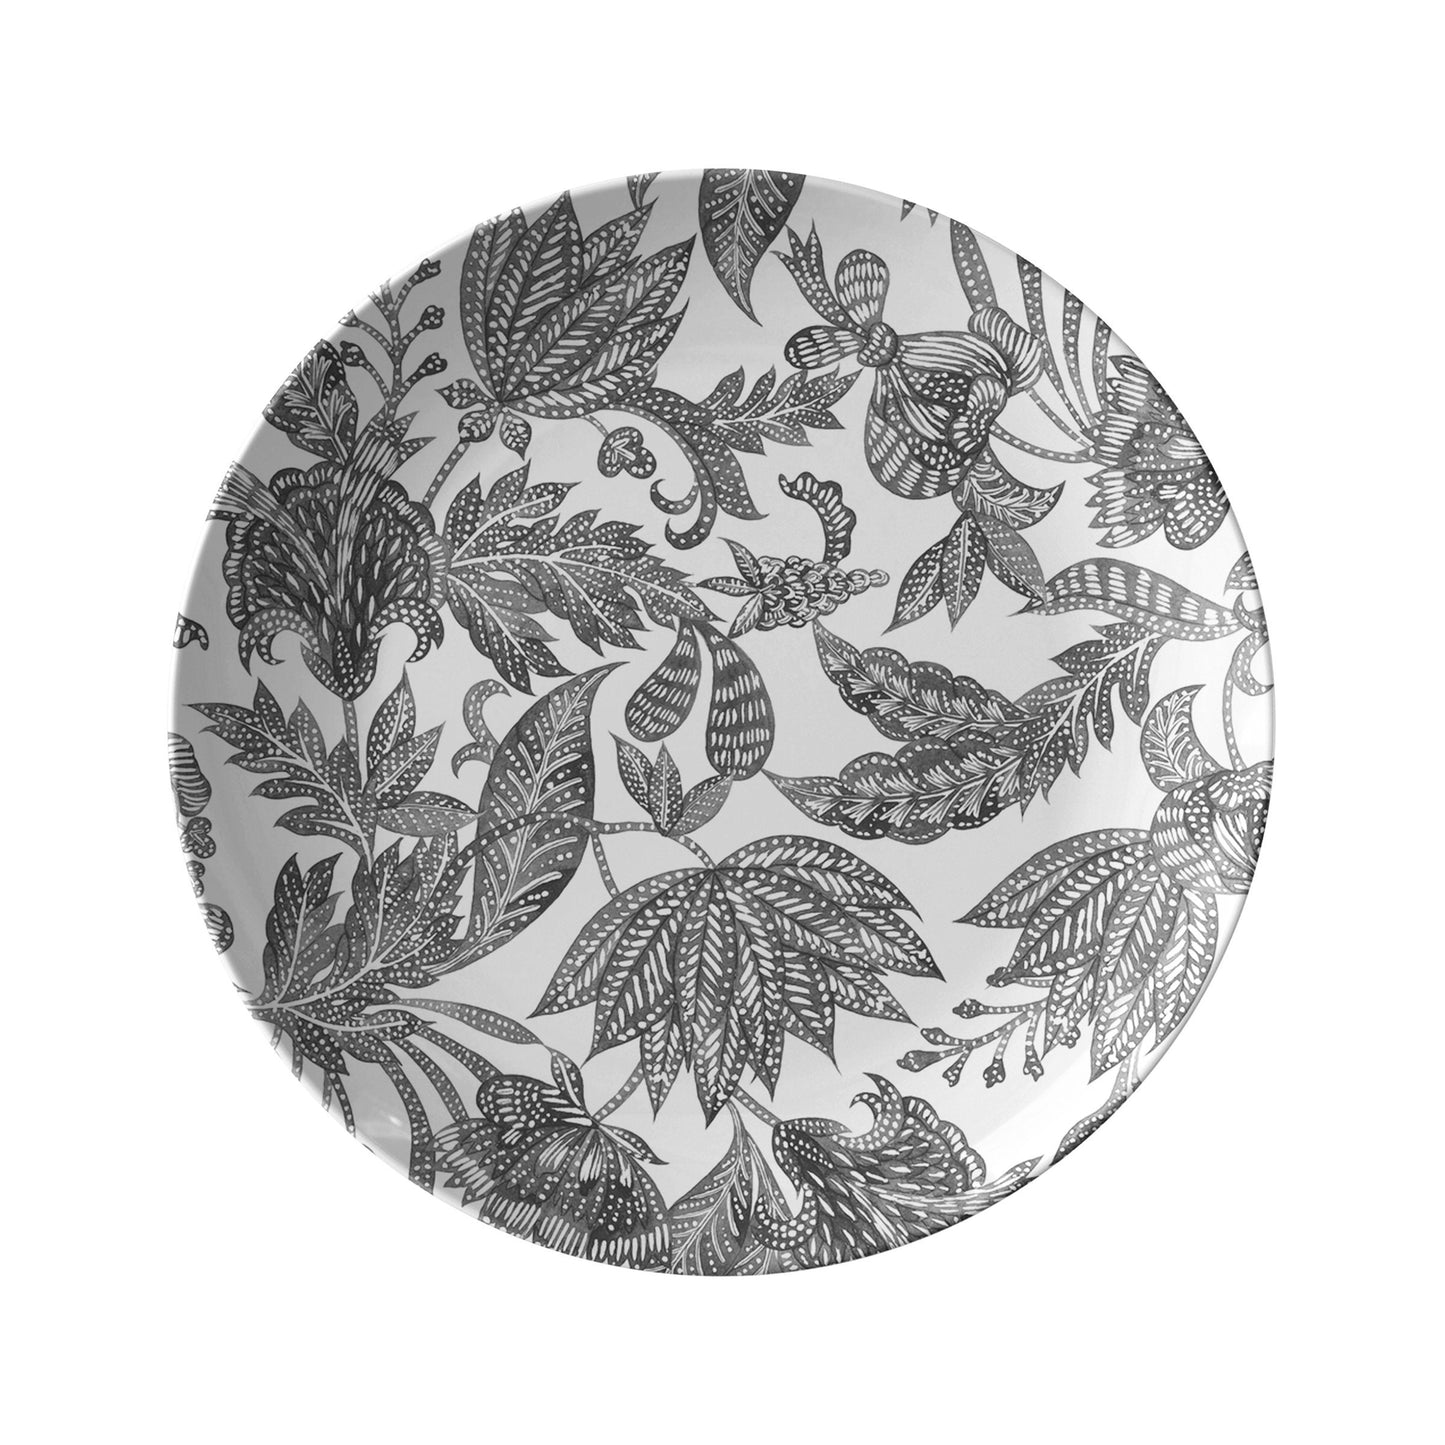 Floral Batik Plates, Set of 4, White & Black, Luxury Thermosaf Plastic